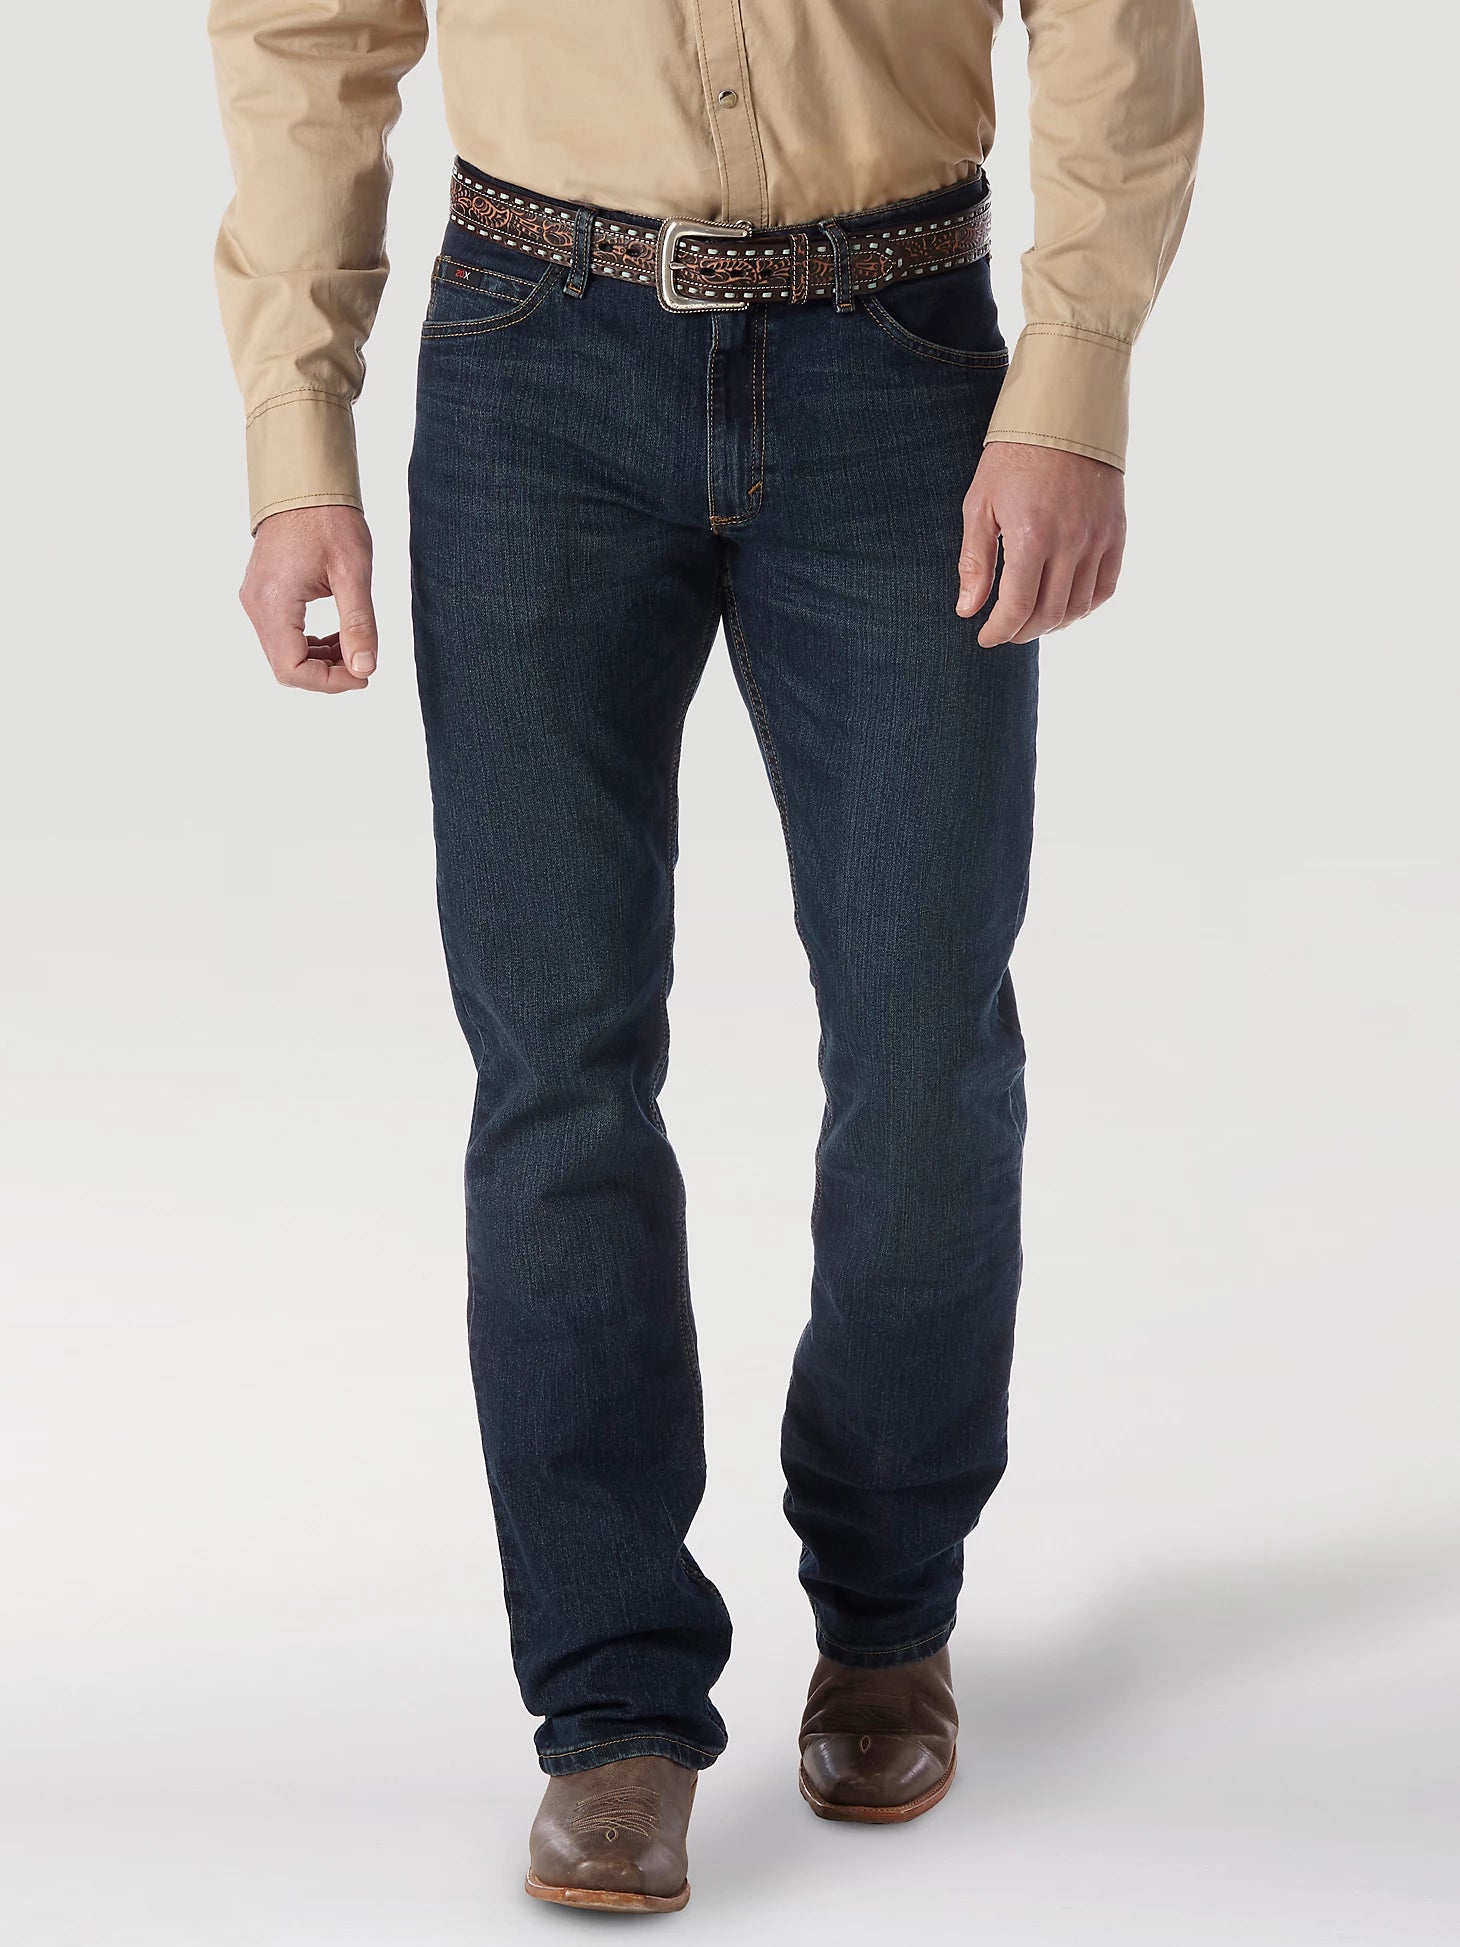 Wrangler Men's 20X 02 Advanced Competition Slim Jeans